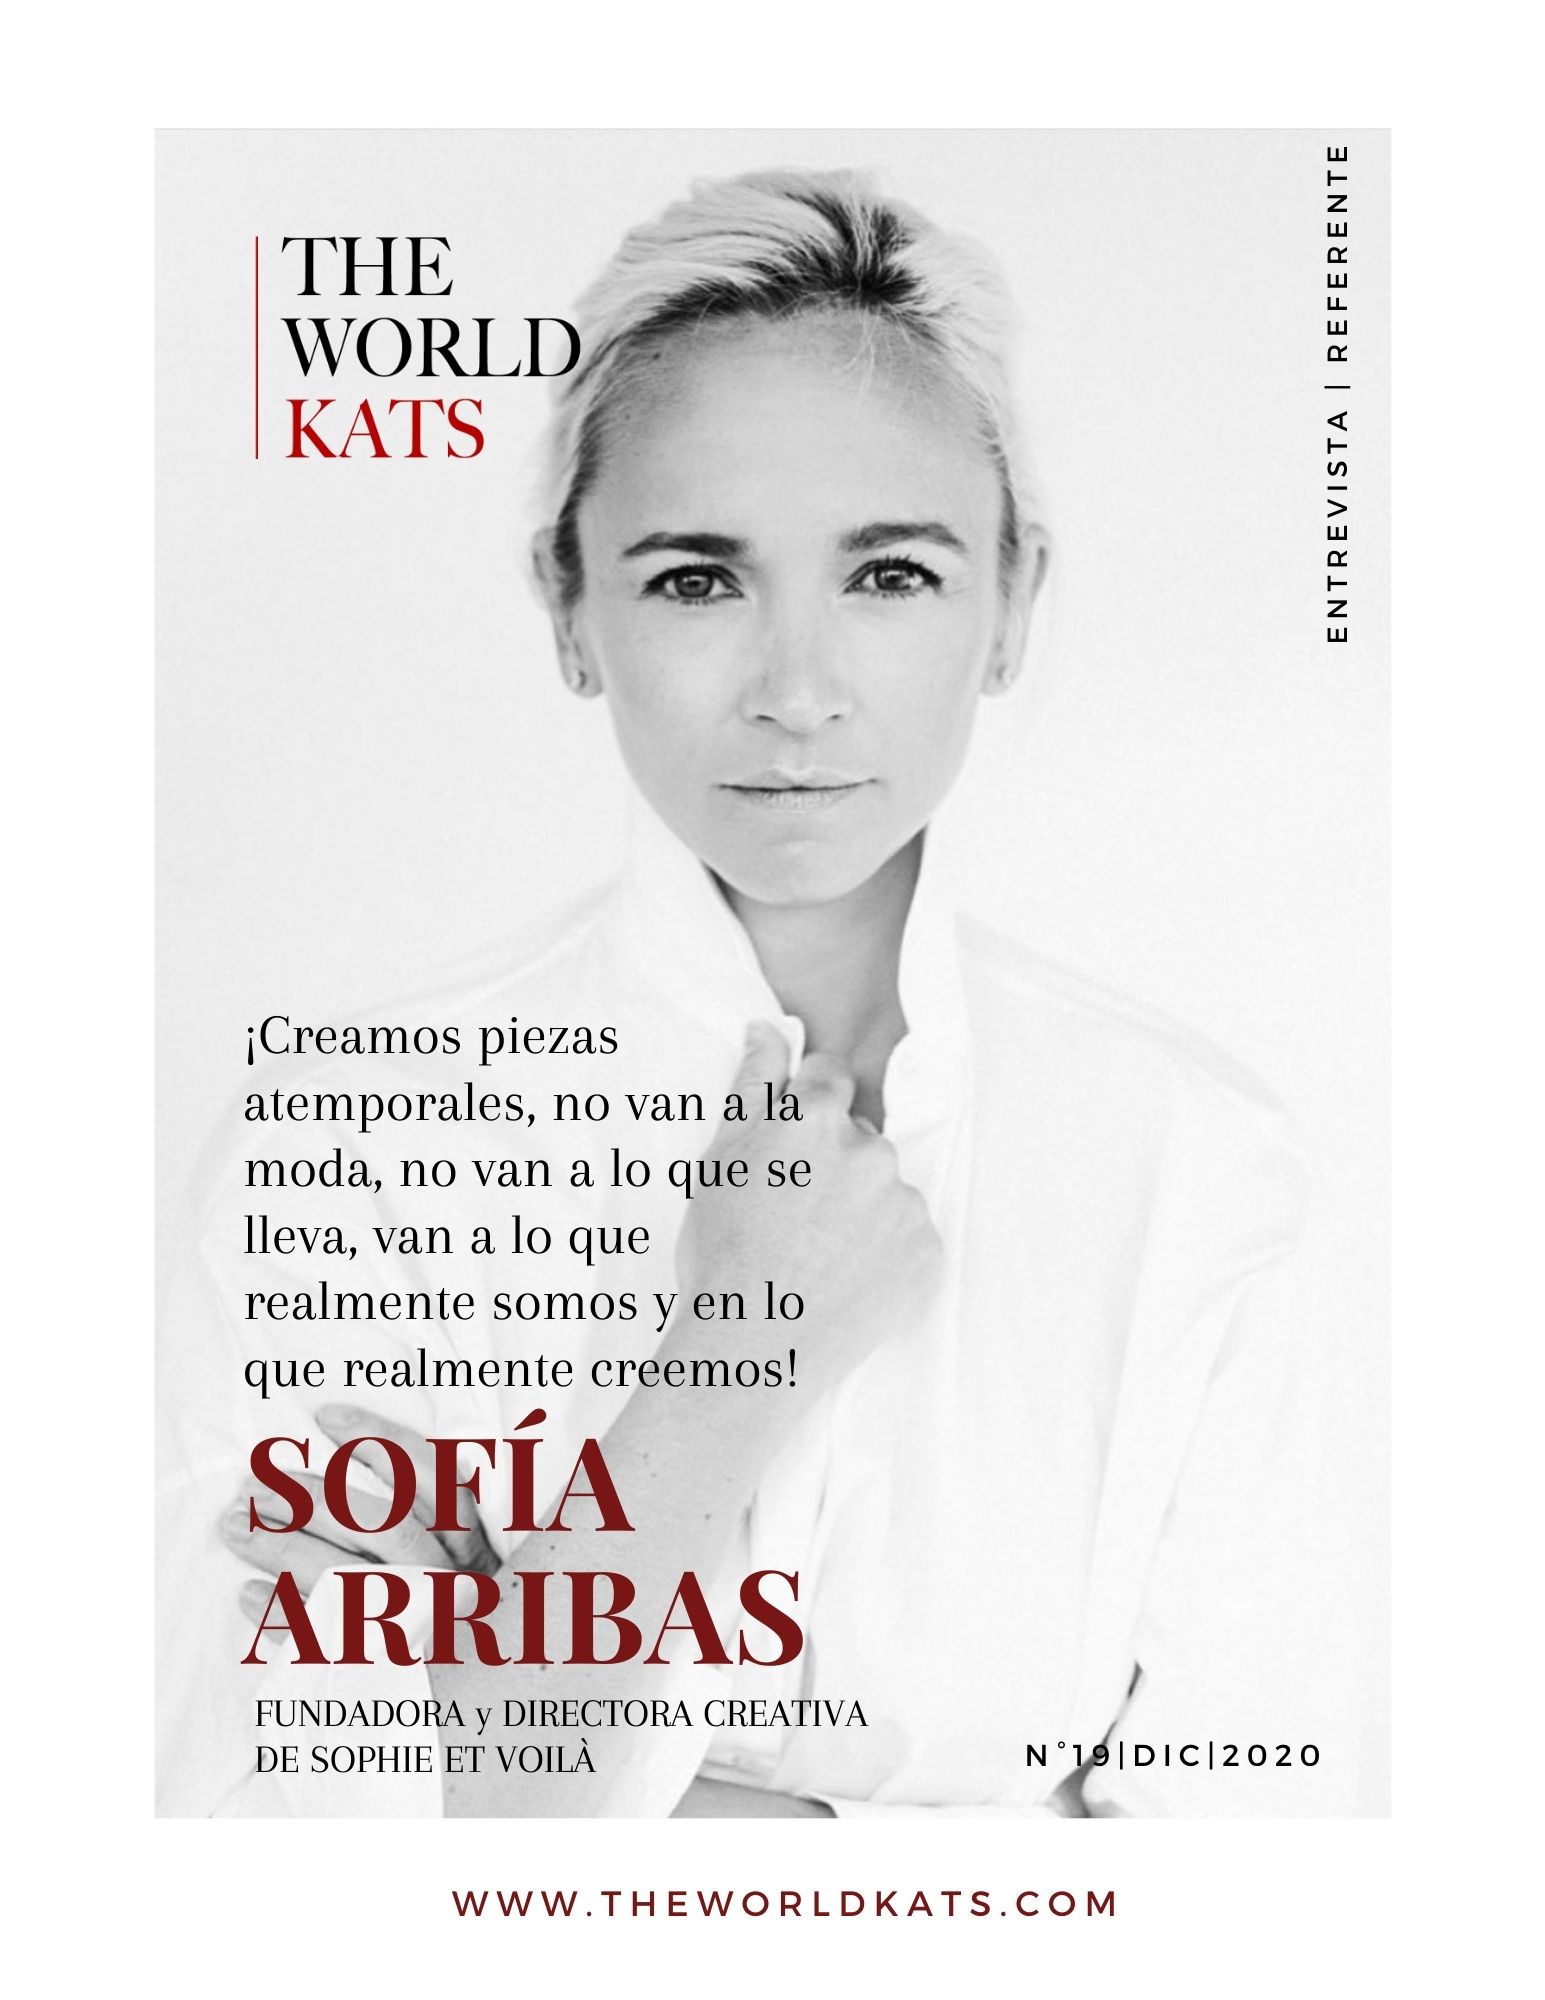 Entrevista a Sofía Arribas, fundadora de Sophie et Voila